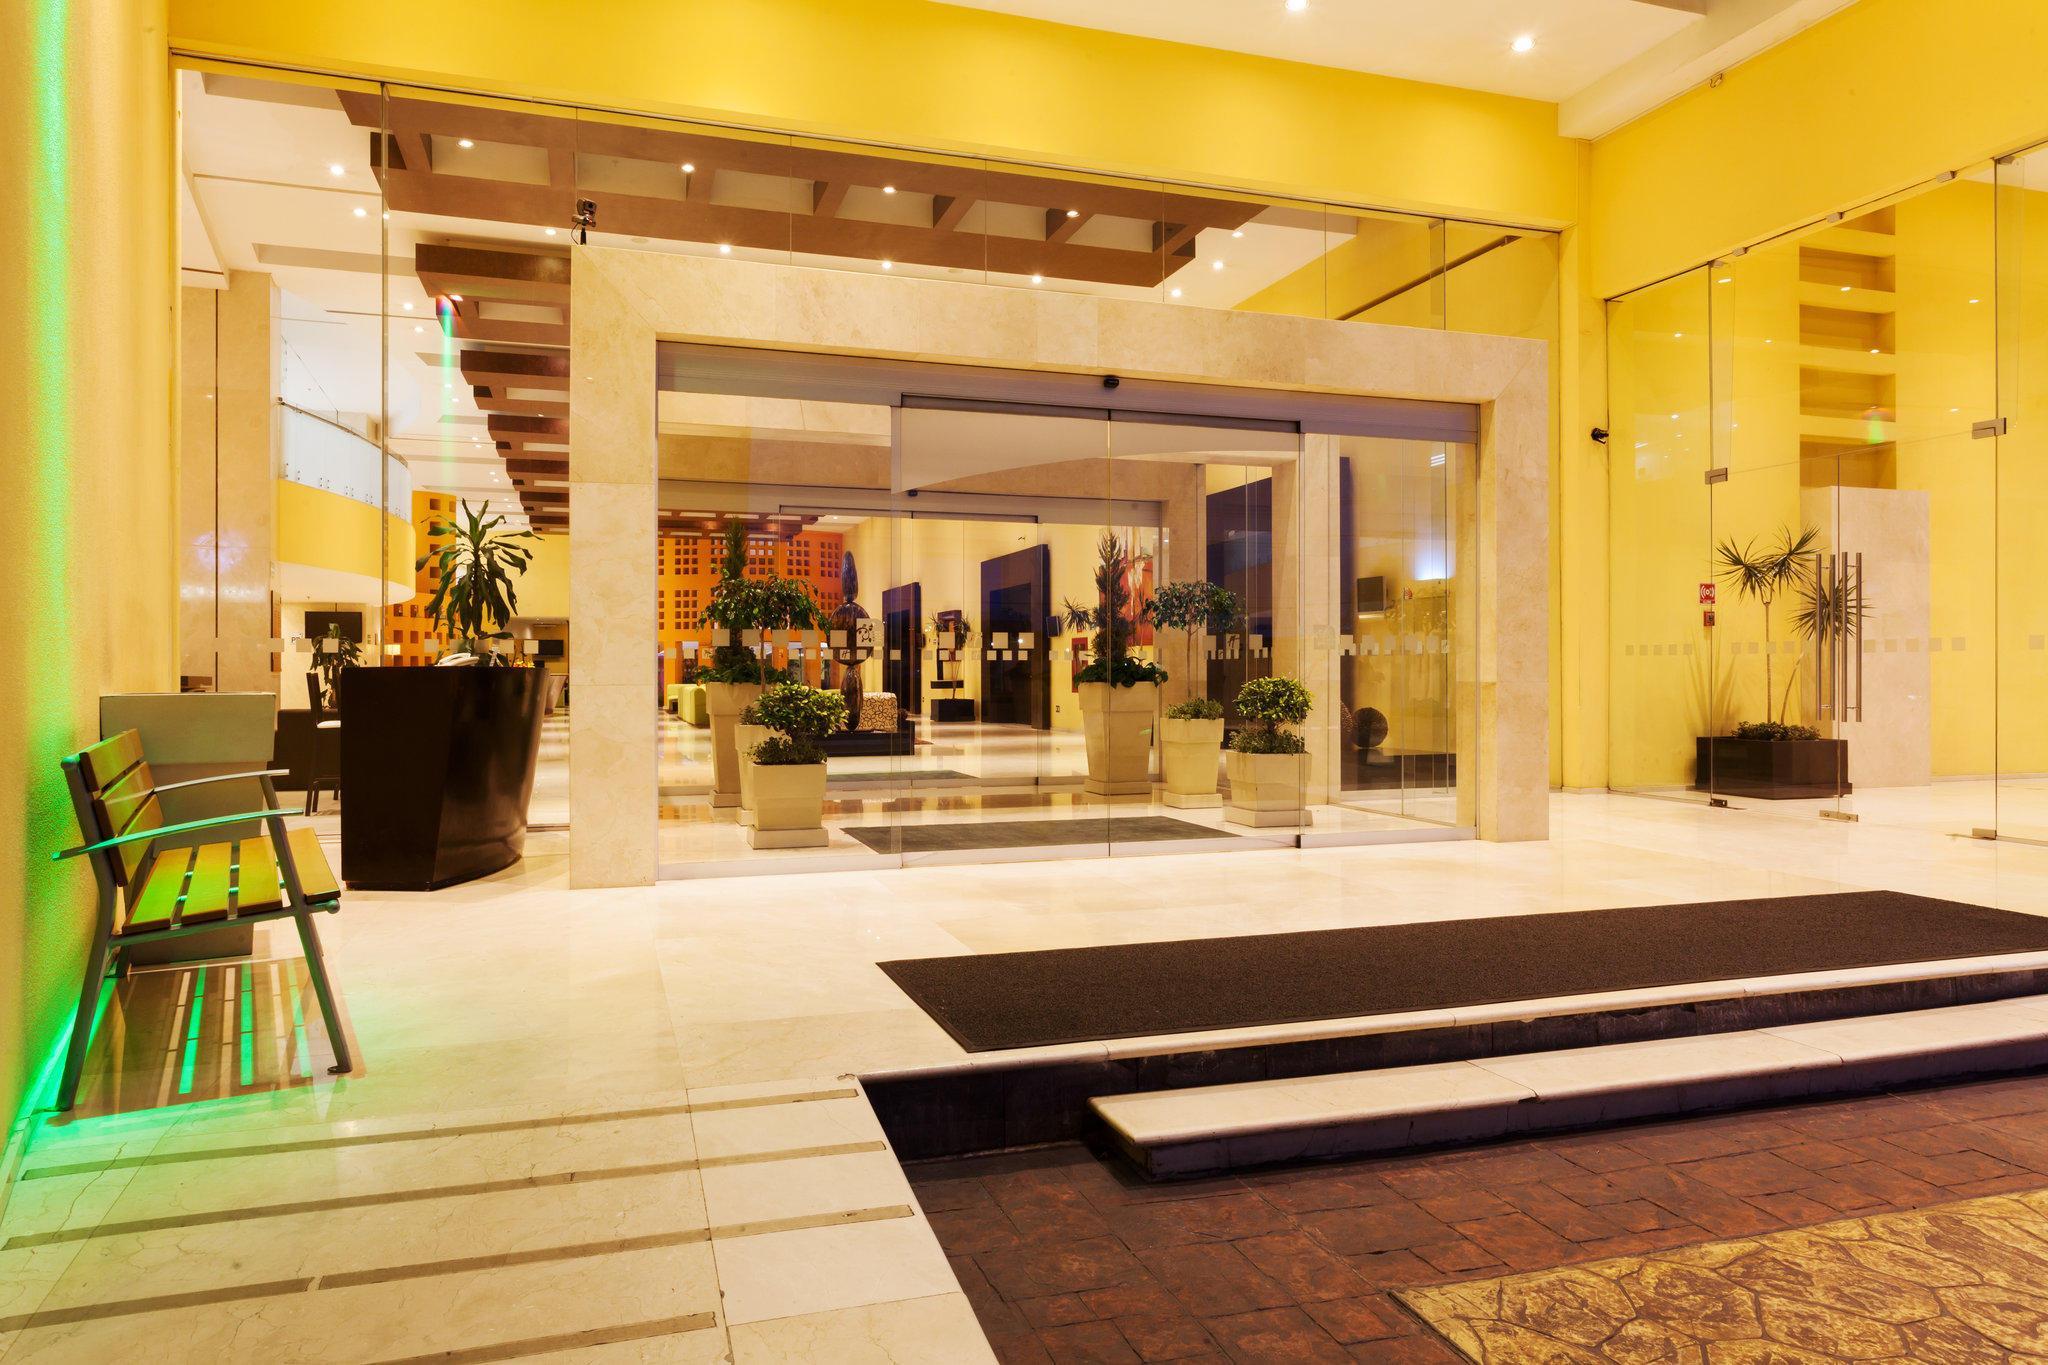 Images Holiday Inn Puebla Finsa, an IHG Hotel